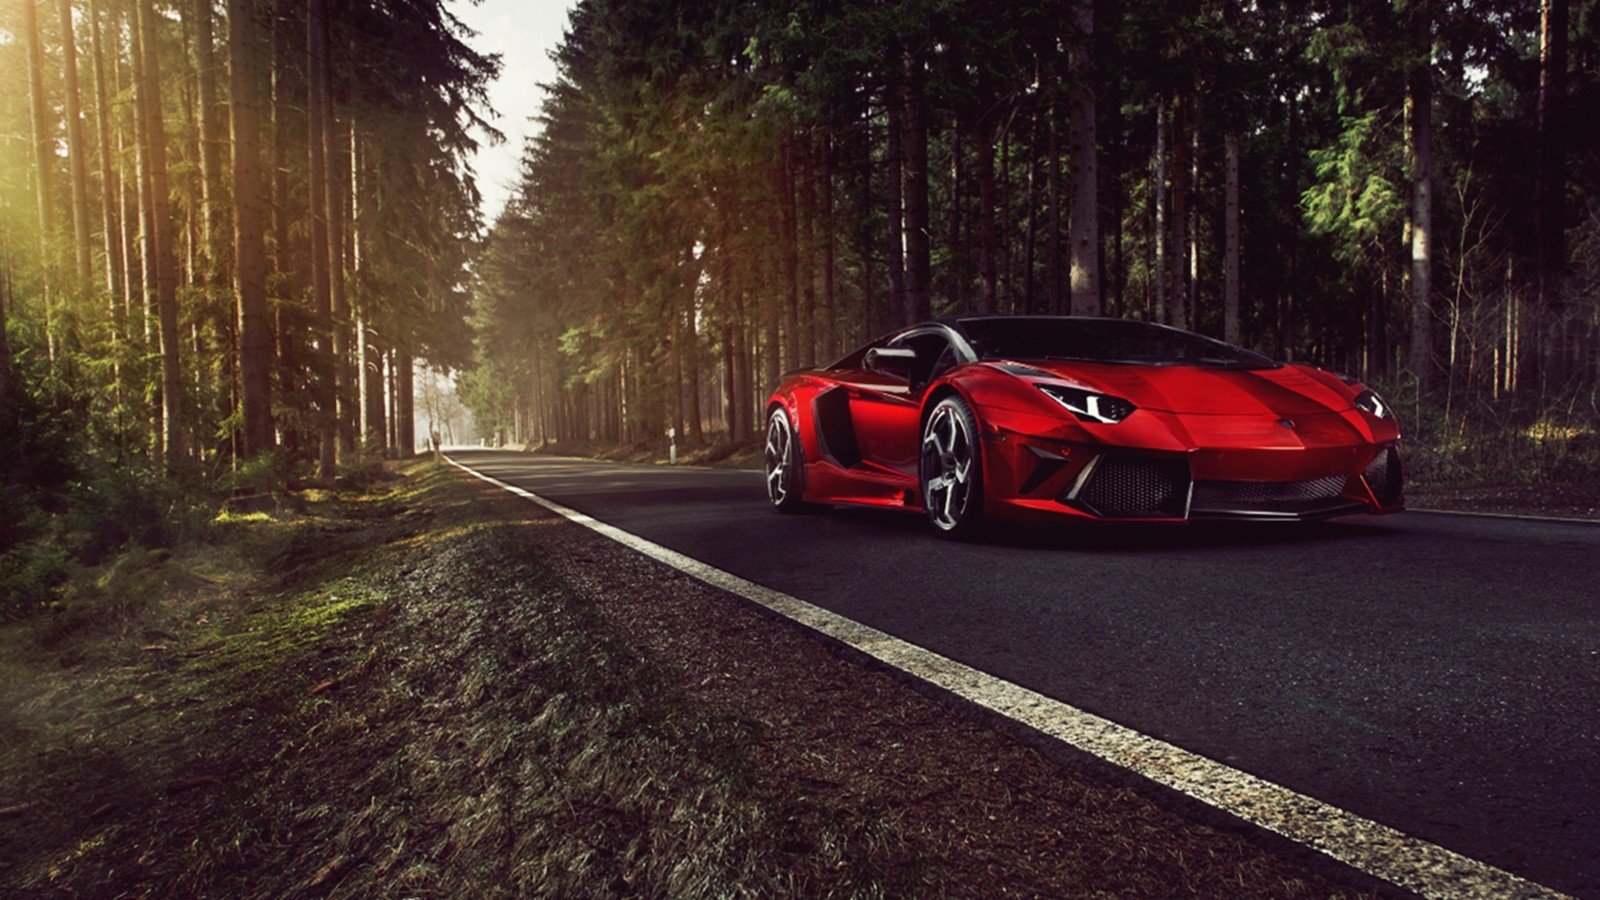 Best Lamborghini Aventador background ID:324029 for High Resolution hd 1600x900 desktop